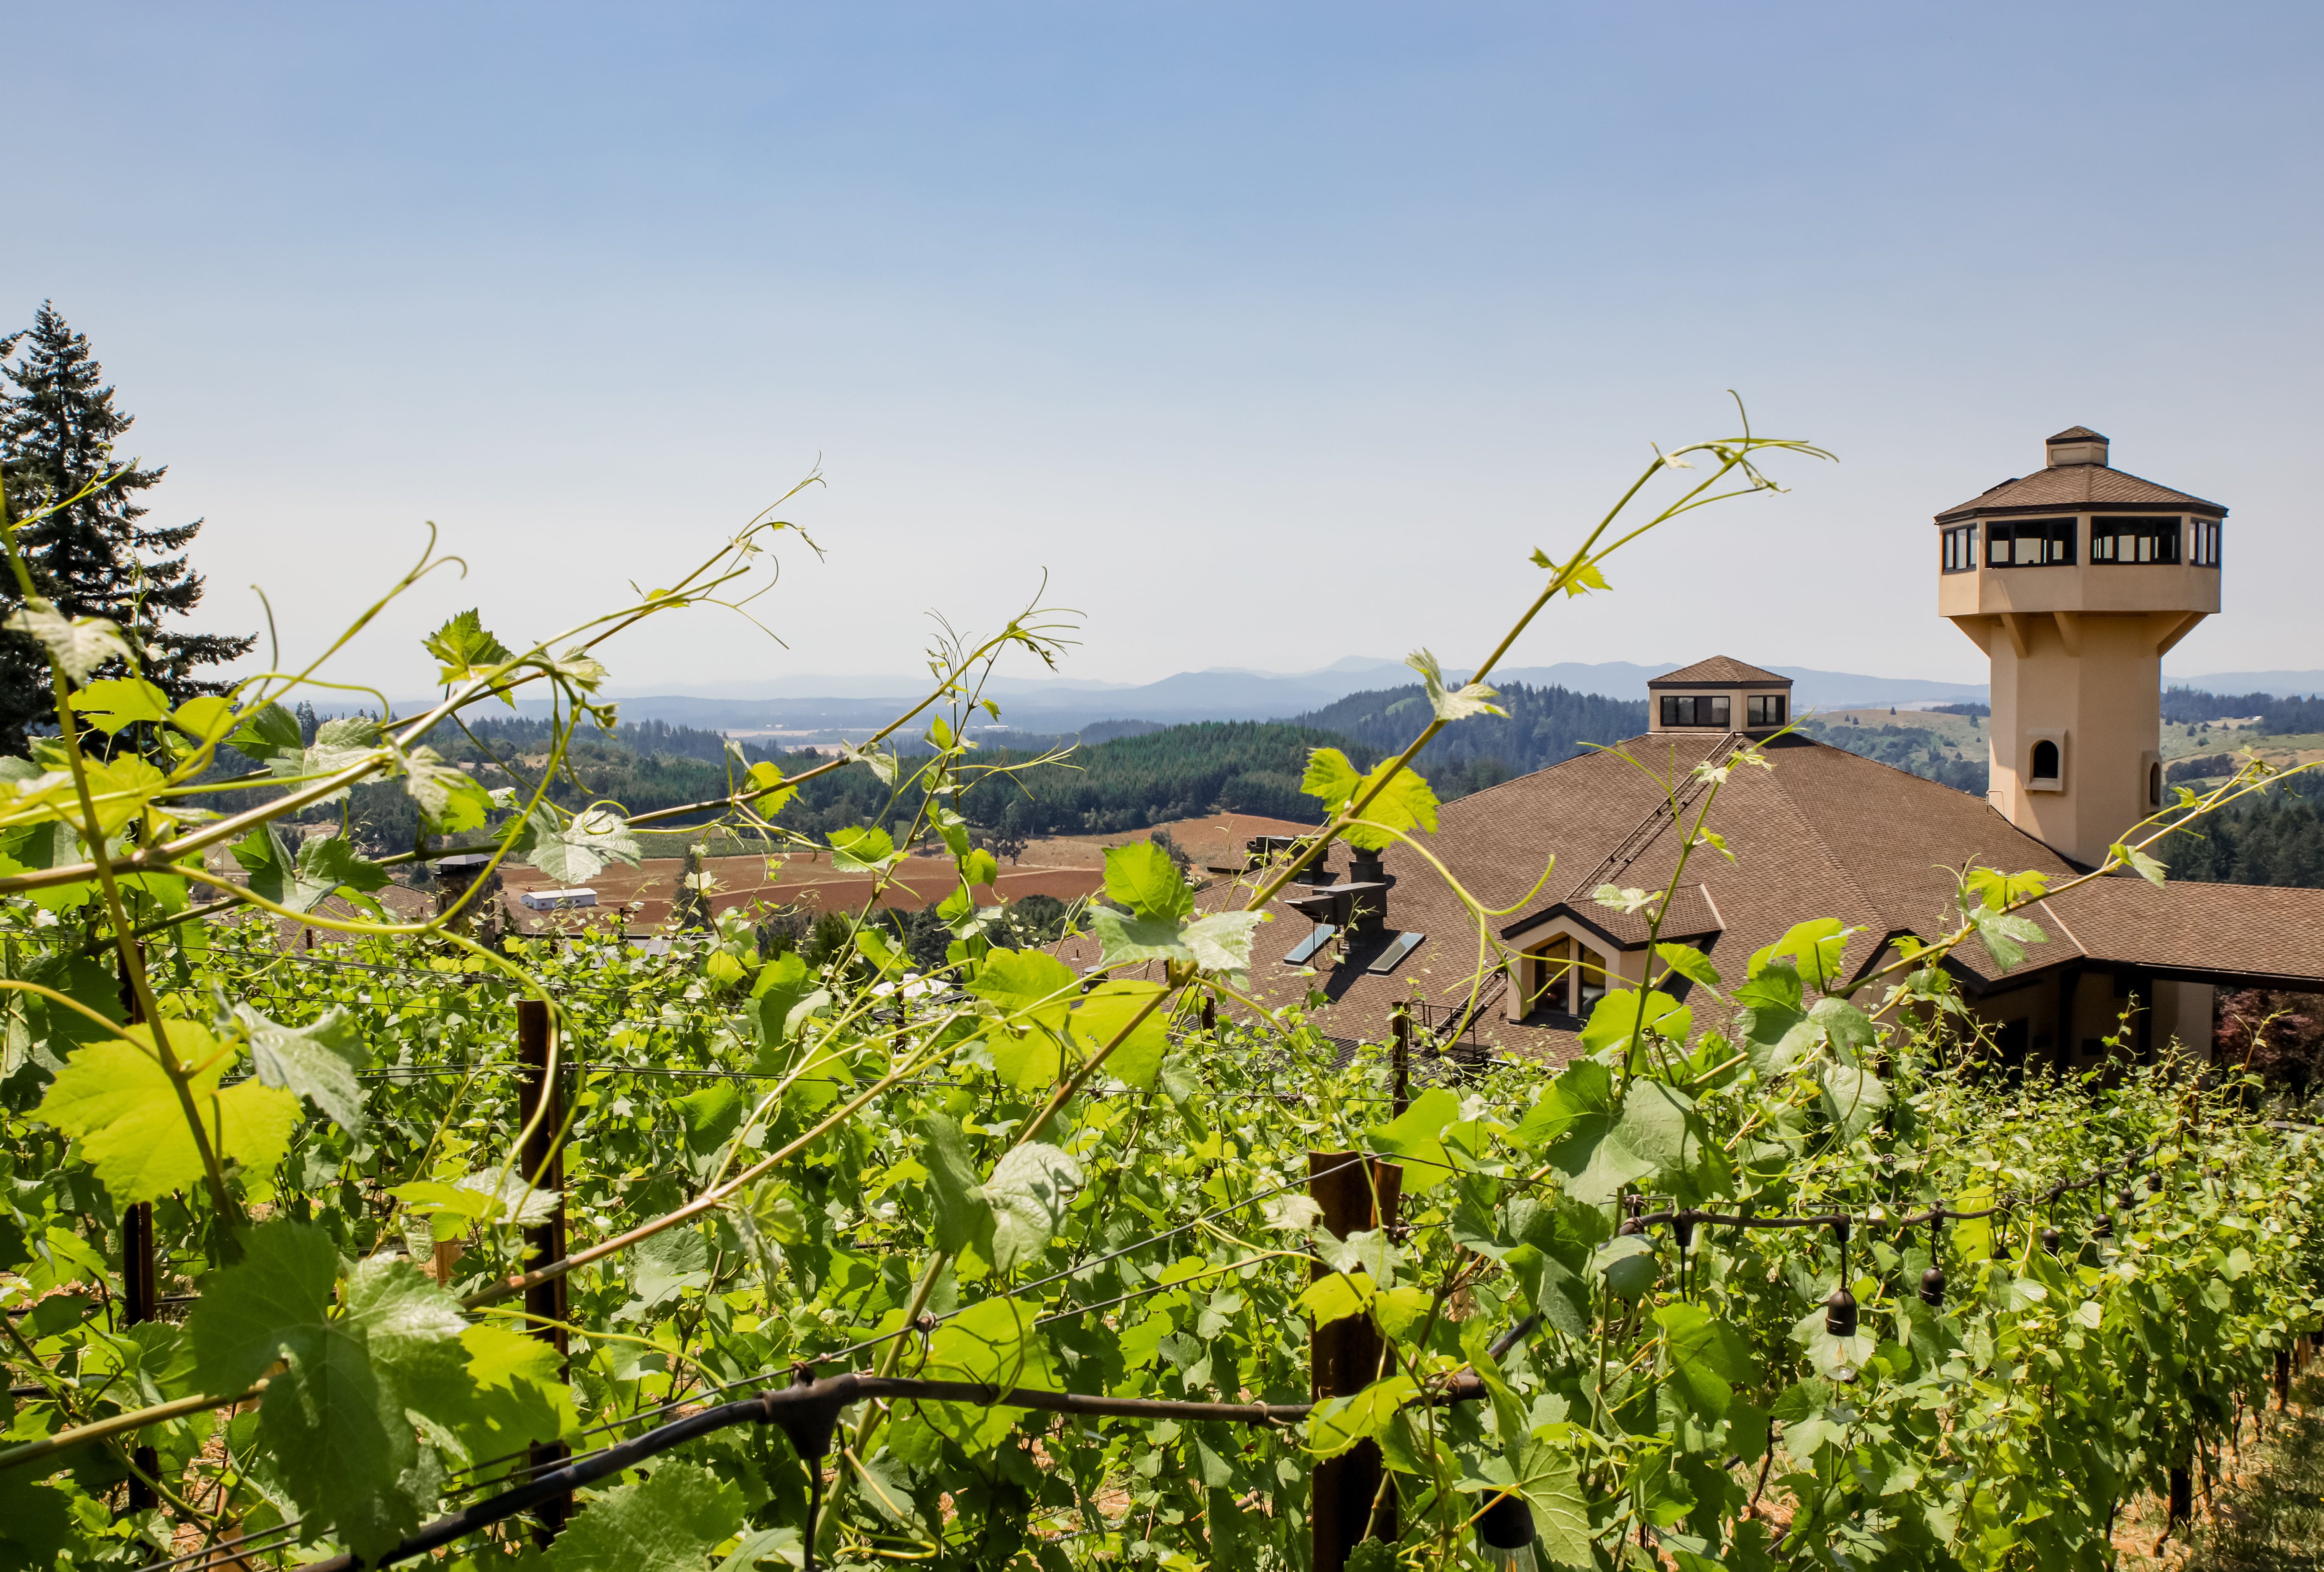 Vines at Willamette Valley Vineyards on June 29, 2021. (Emily Krouse)